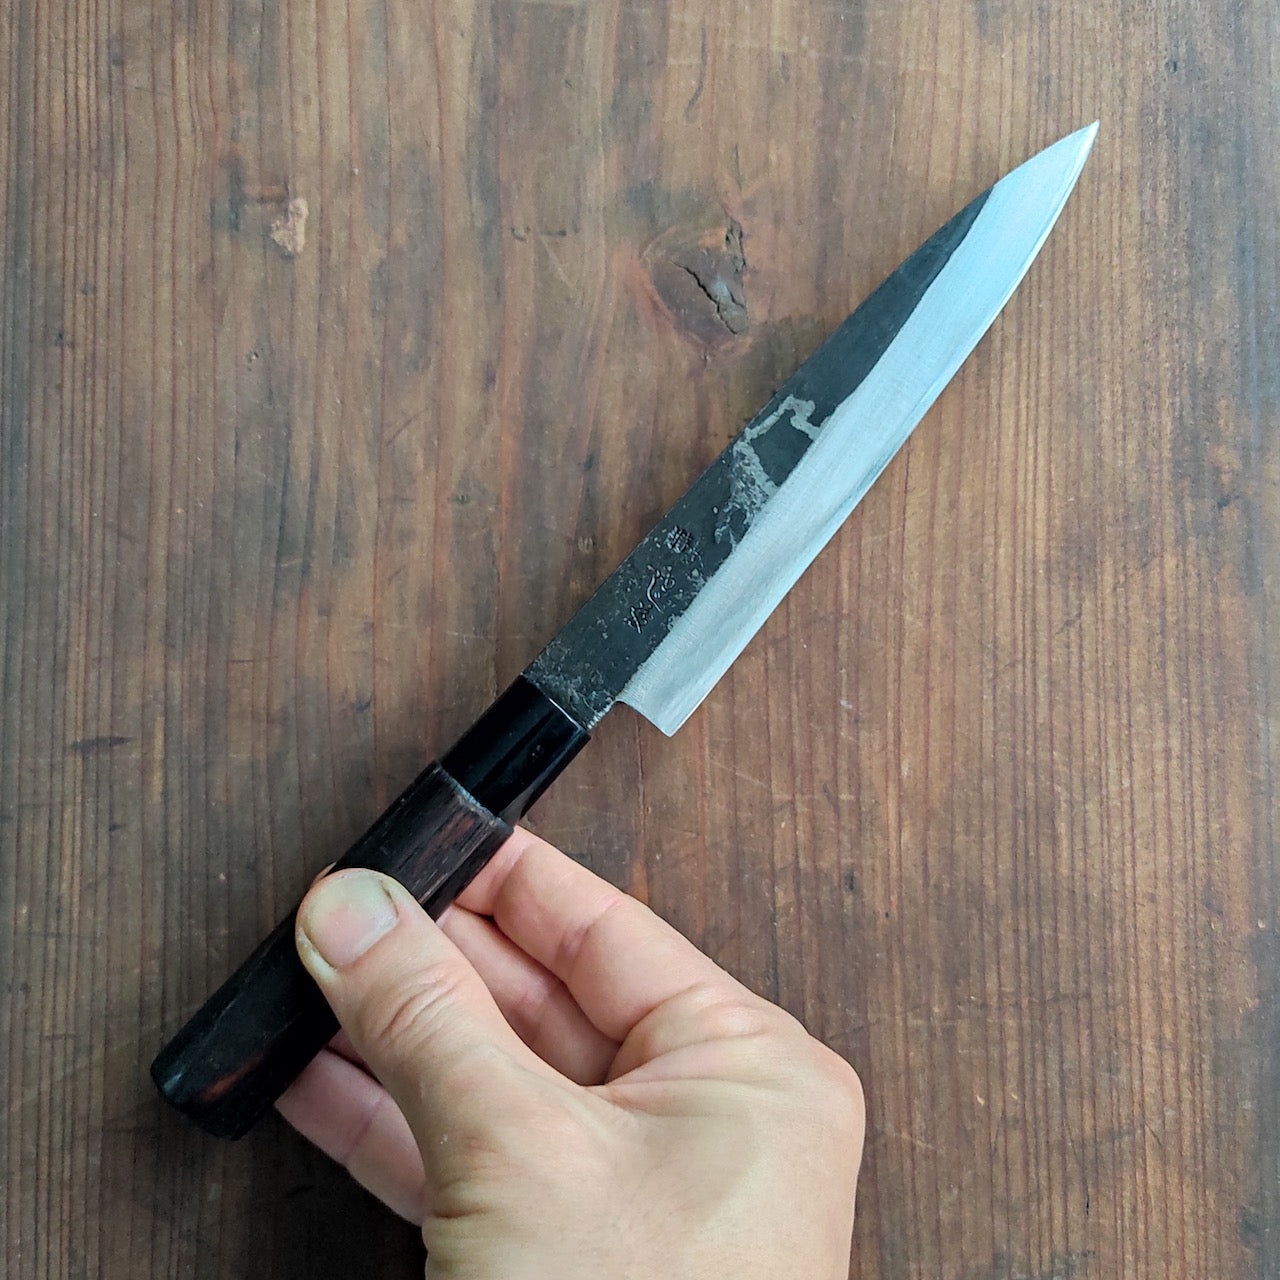 Harvest knife